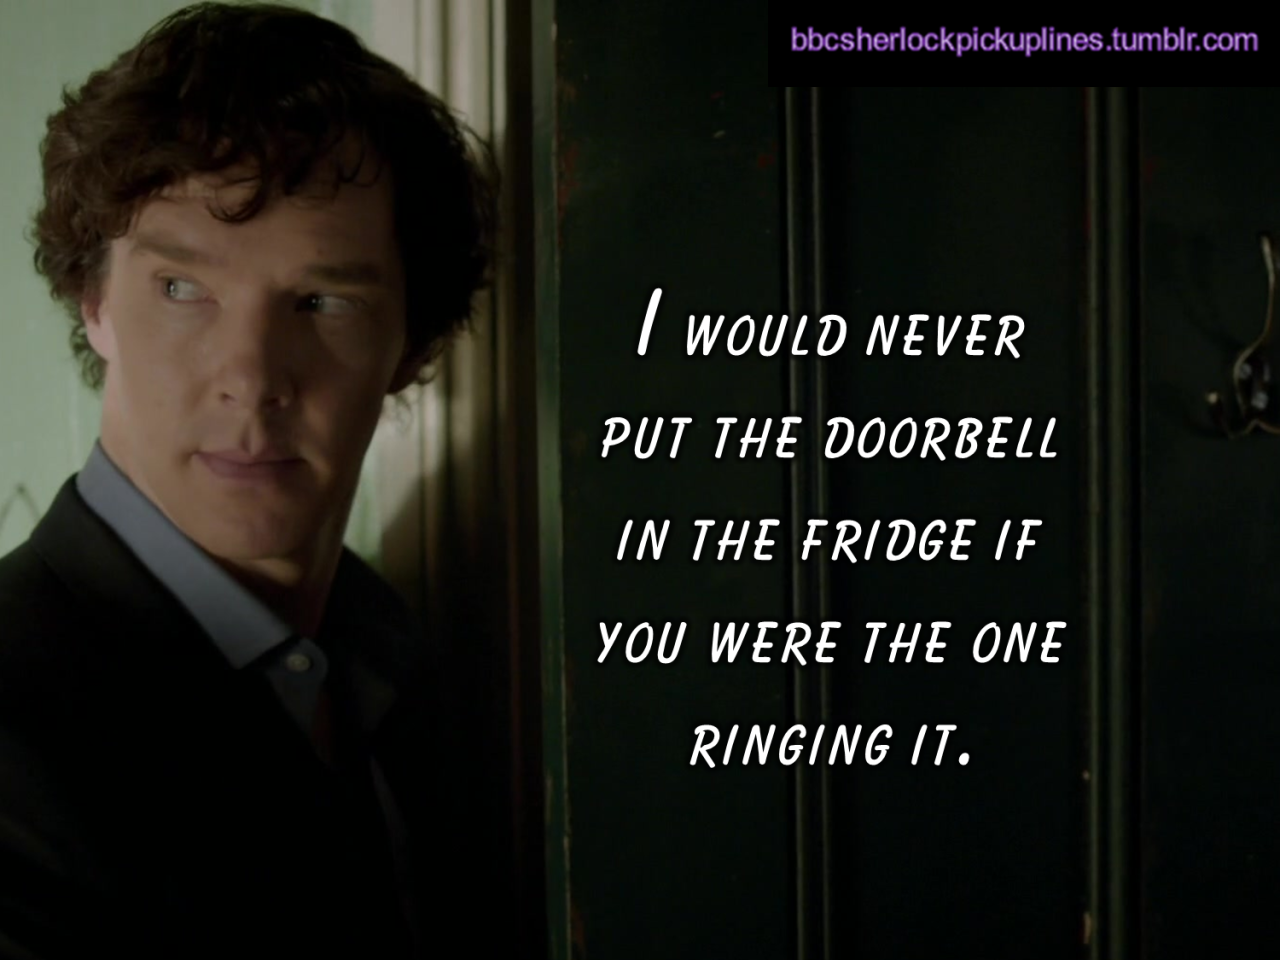 bbcsherlockpickuplines:  â€œI would never put the doorbell in the fridge if you